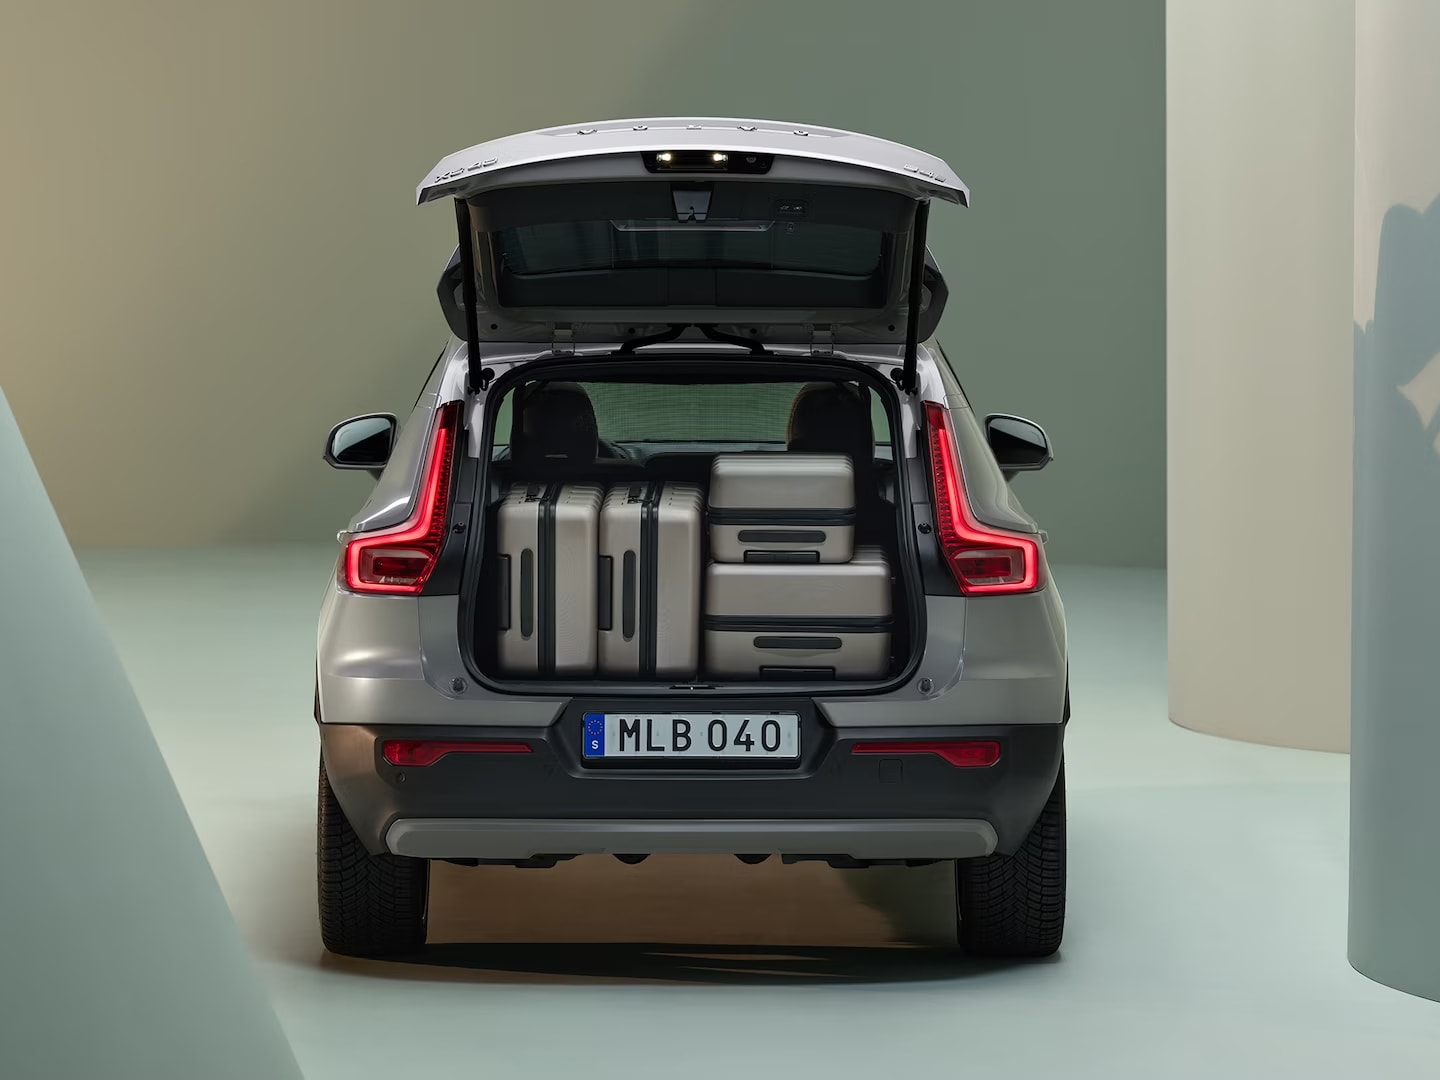 The boot of the Volvo XC40 mild hybrid SUV optimises storage capacity.